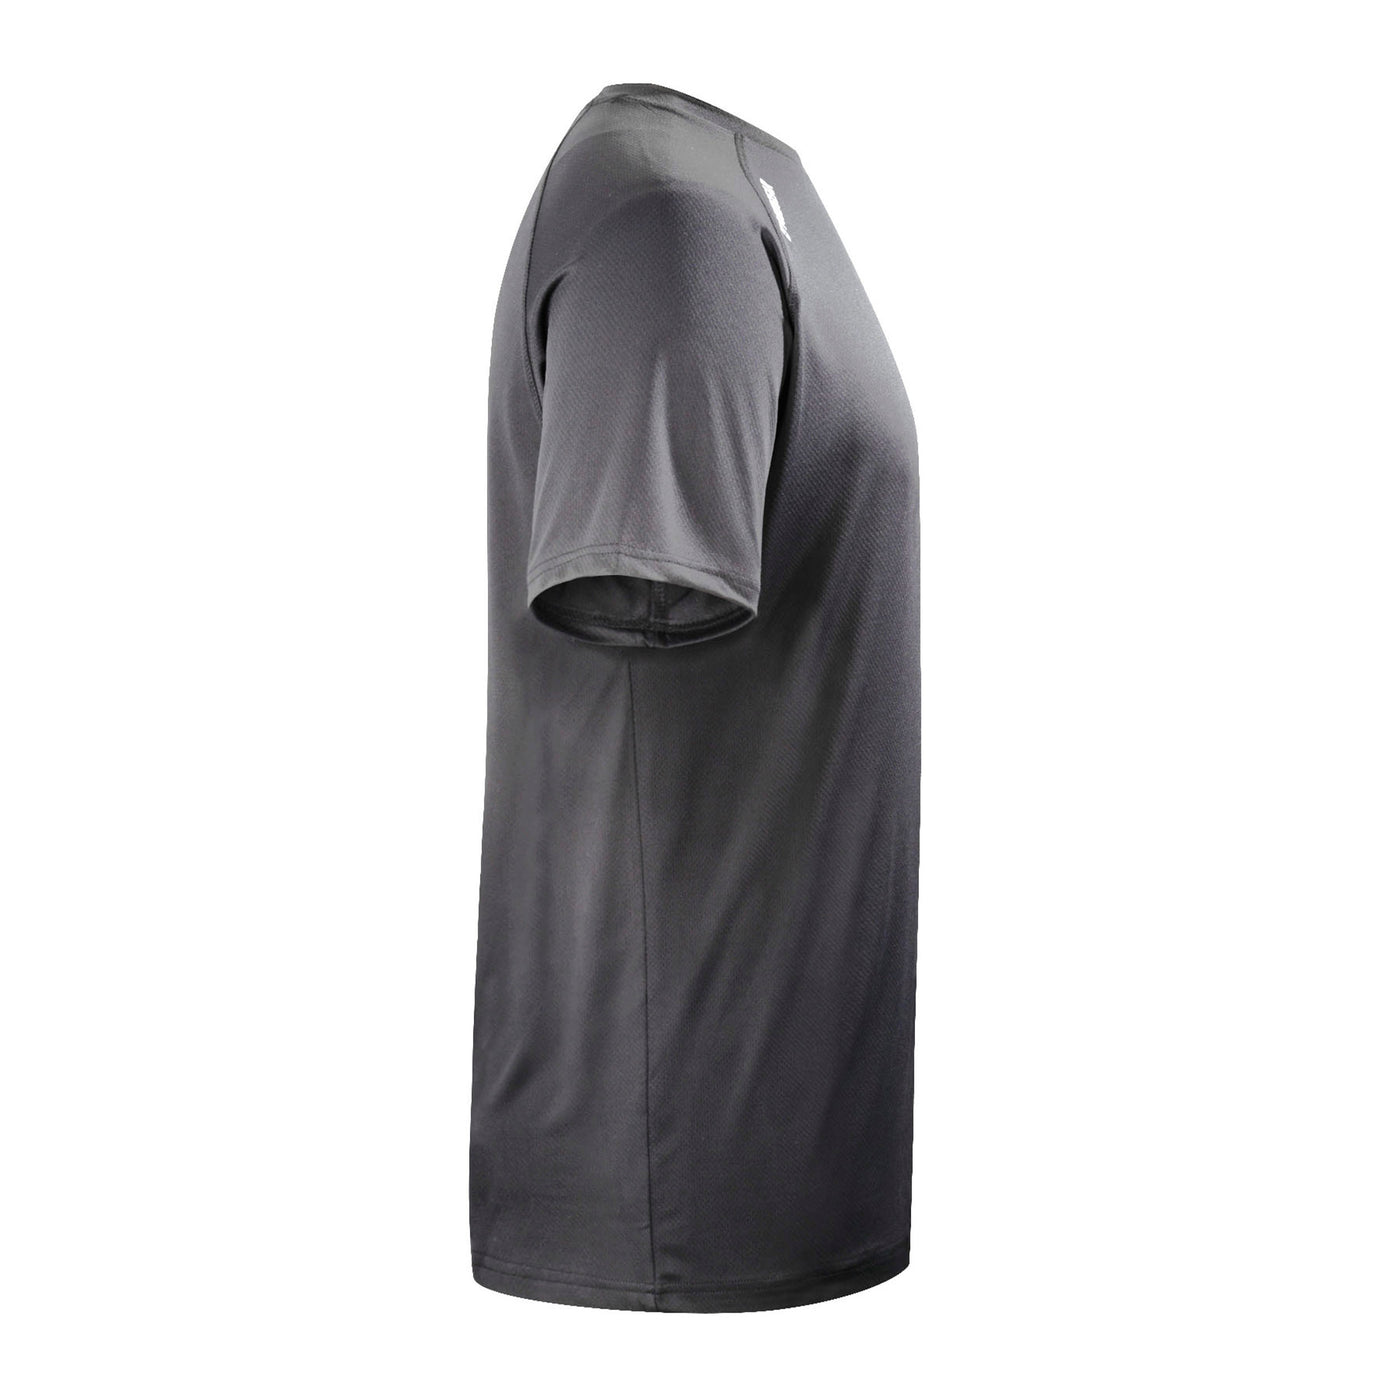 Men's Loose Fit Performance Shirt VX - Short Sleeve (Tornado Gray)